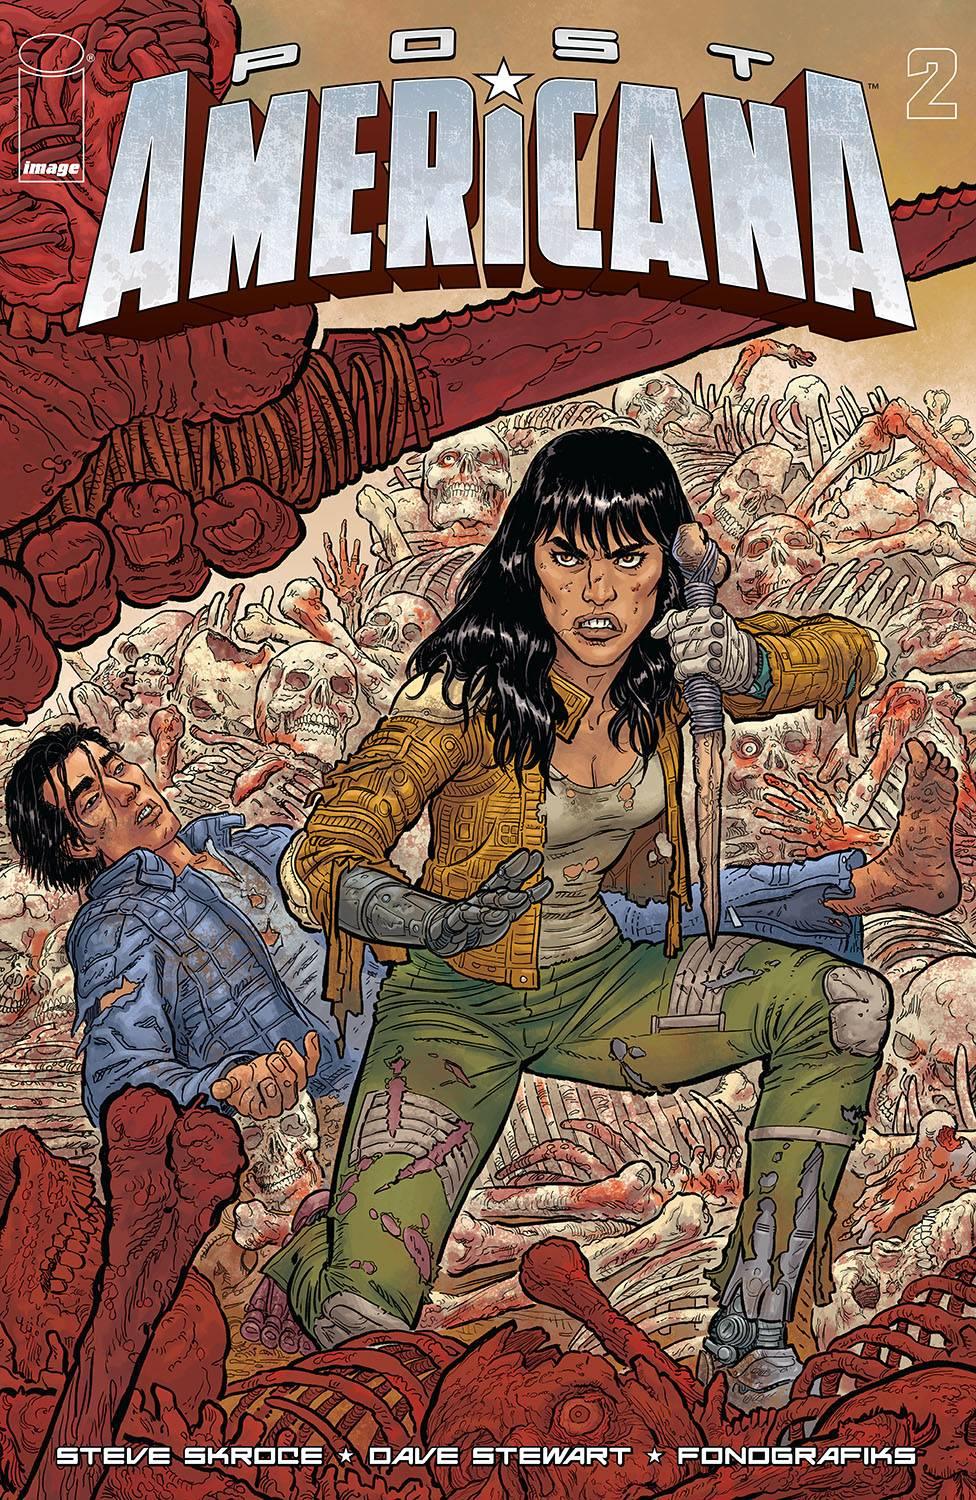 Post Americana #2 (of 6) (mr) Image Comics Comic Book